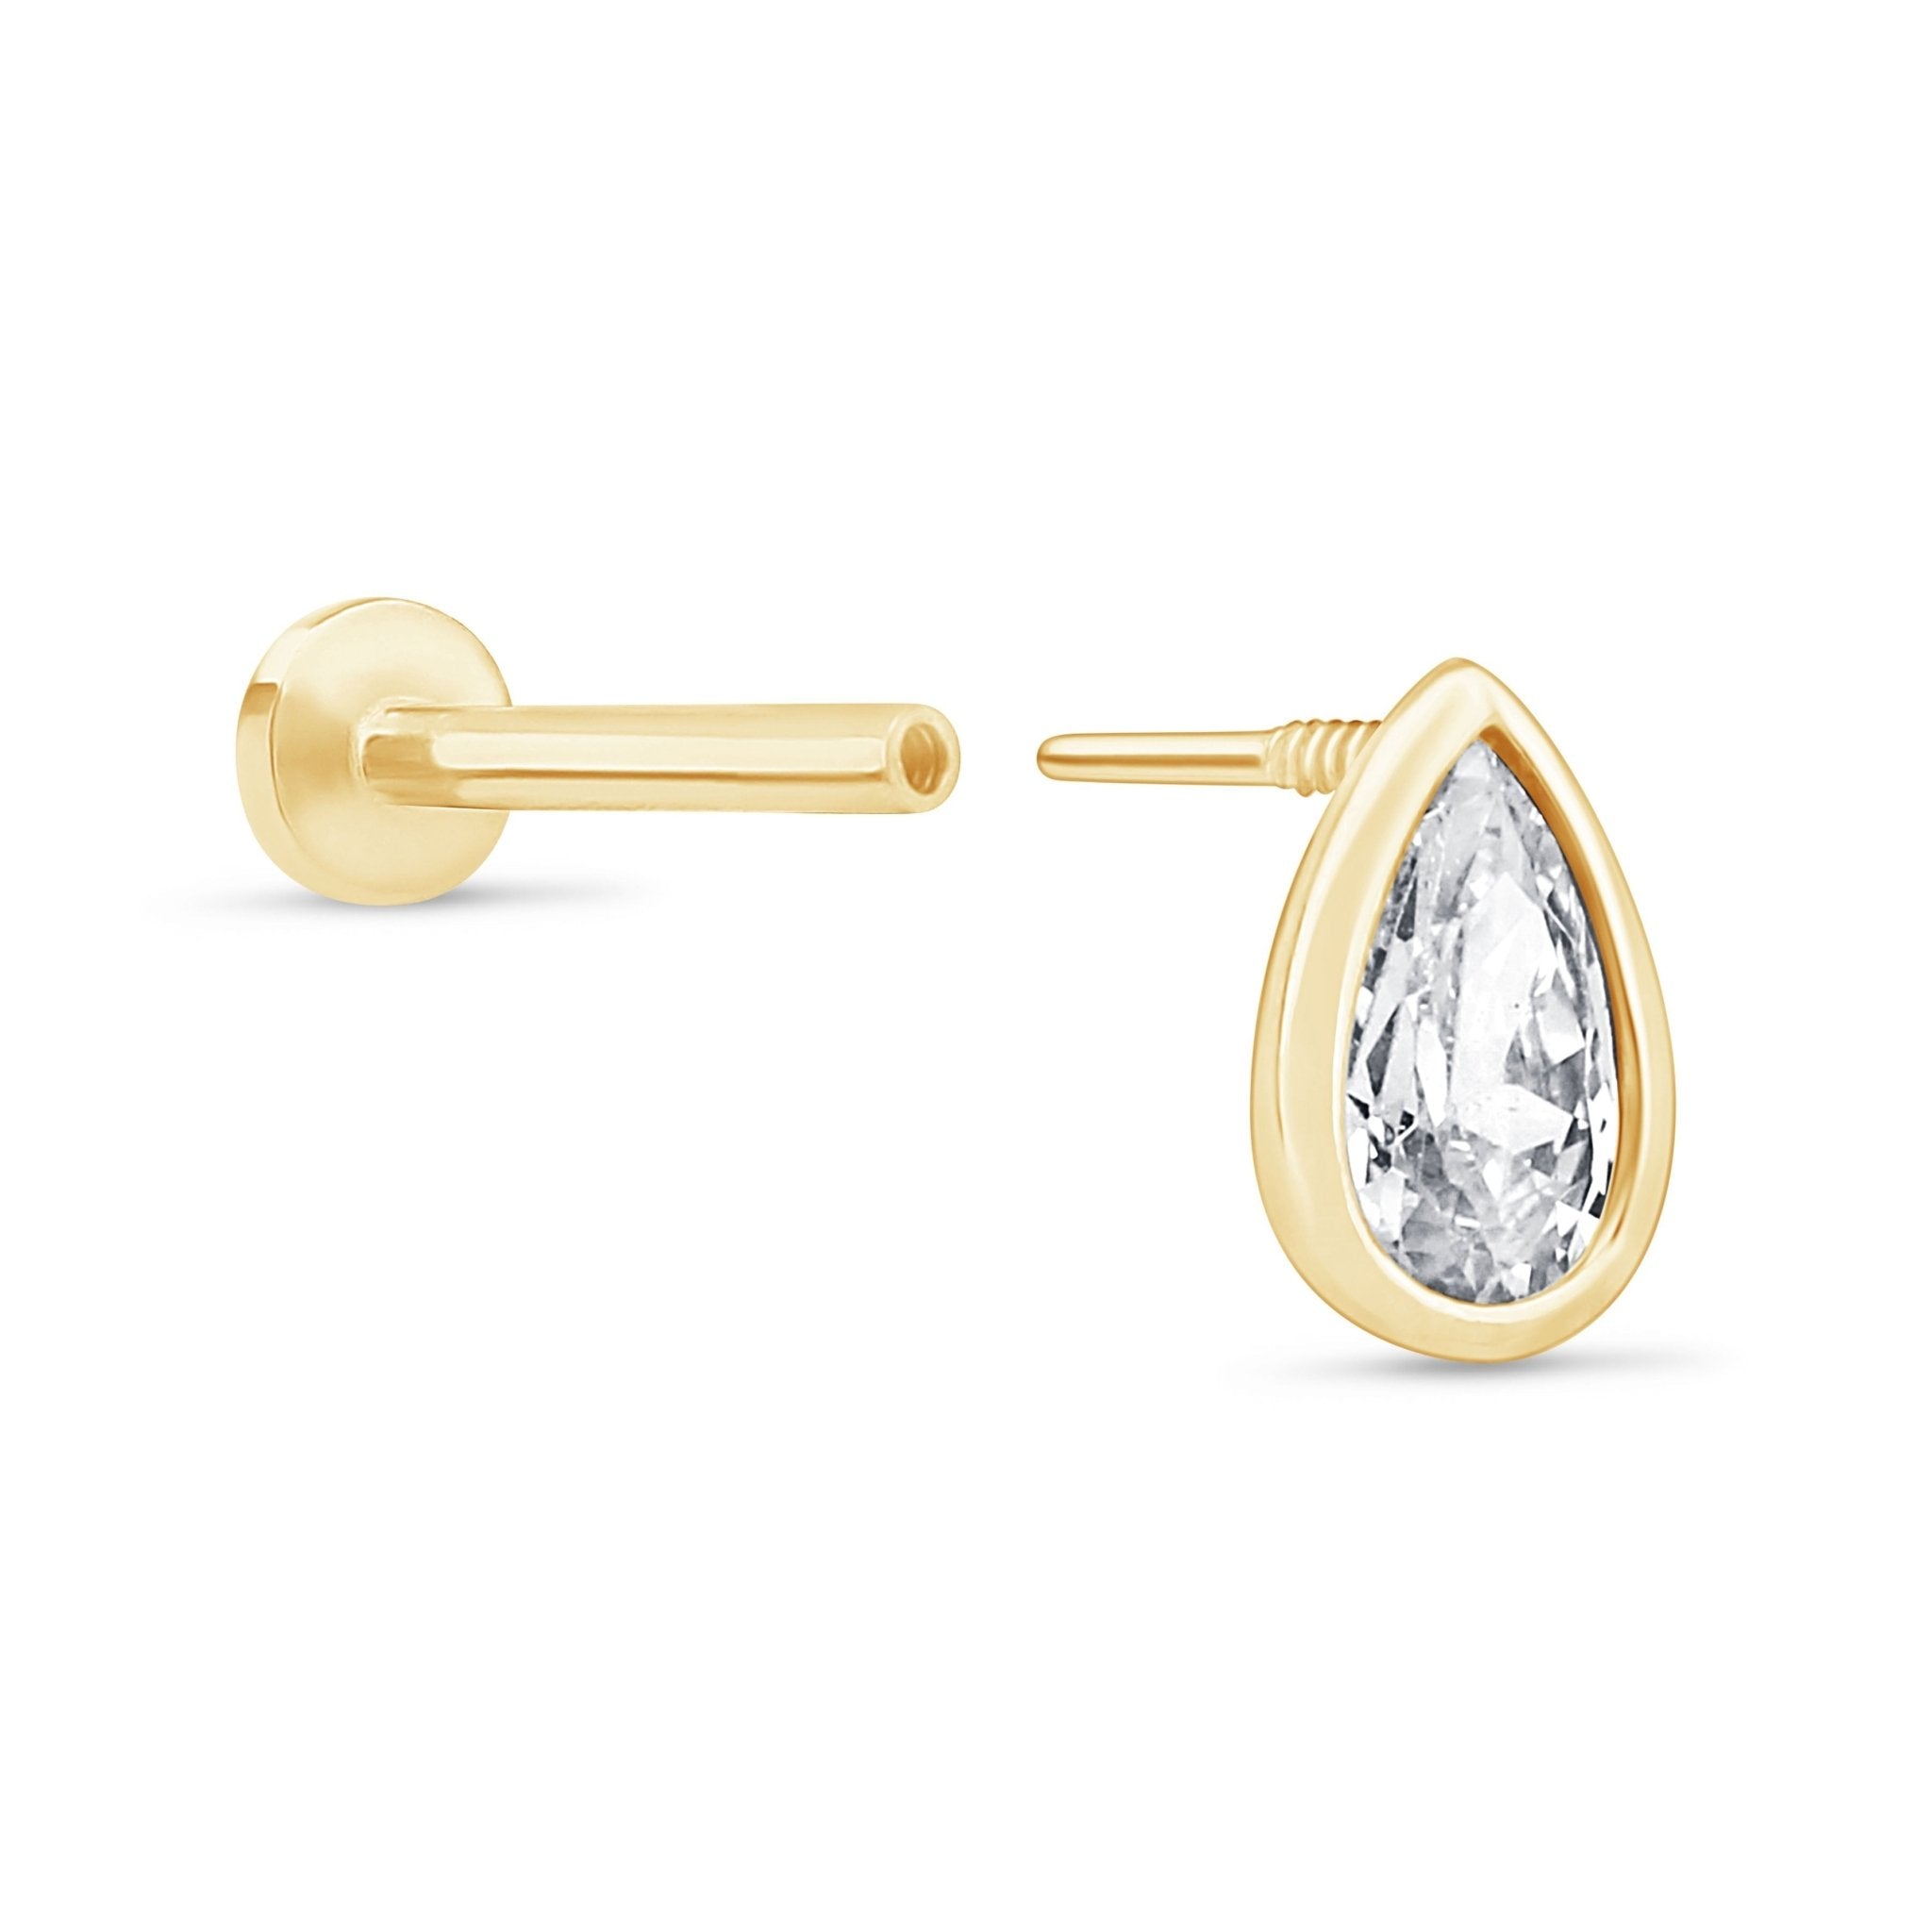 Bezel Set Pear Earring in Solid Yellow Gold Earrings Estella Collection #product_description# 18601 test test mechanic #tag4# #tag5# #tag6# #tag7# #tag8# #tag9# #tag10#